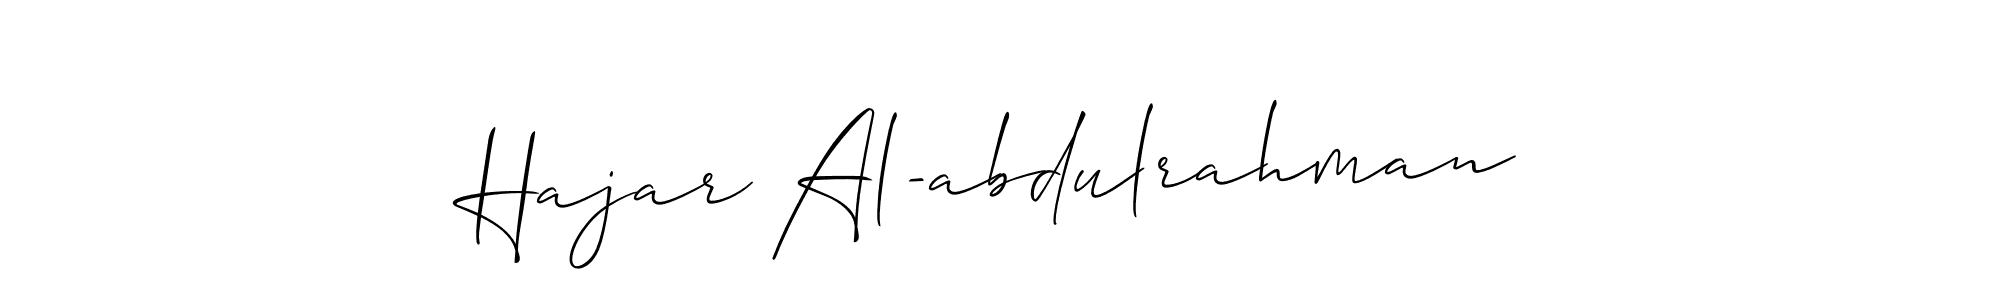 Make a beautiful signature design for name Hajar Al-abdulrahman. Use this online signature maker to create a handwritten signature for free. Hajar Al-abdulrahman signature style 2 images and pictures png